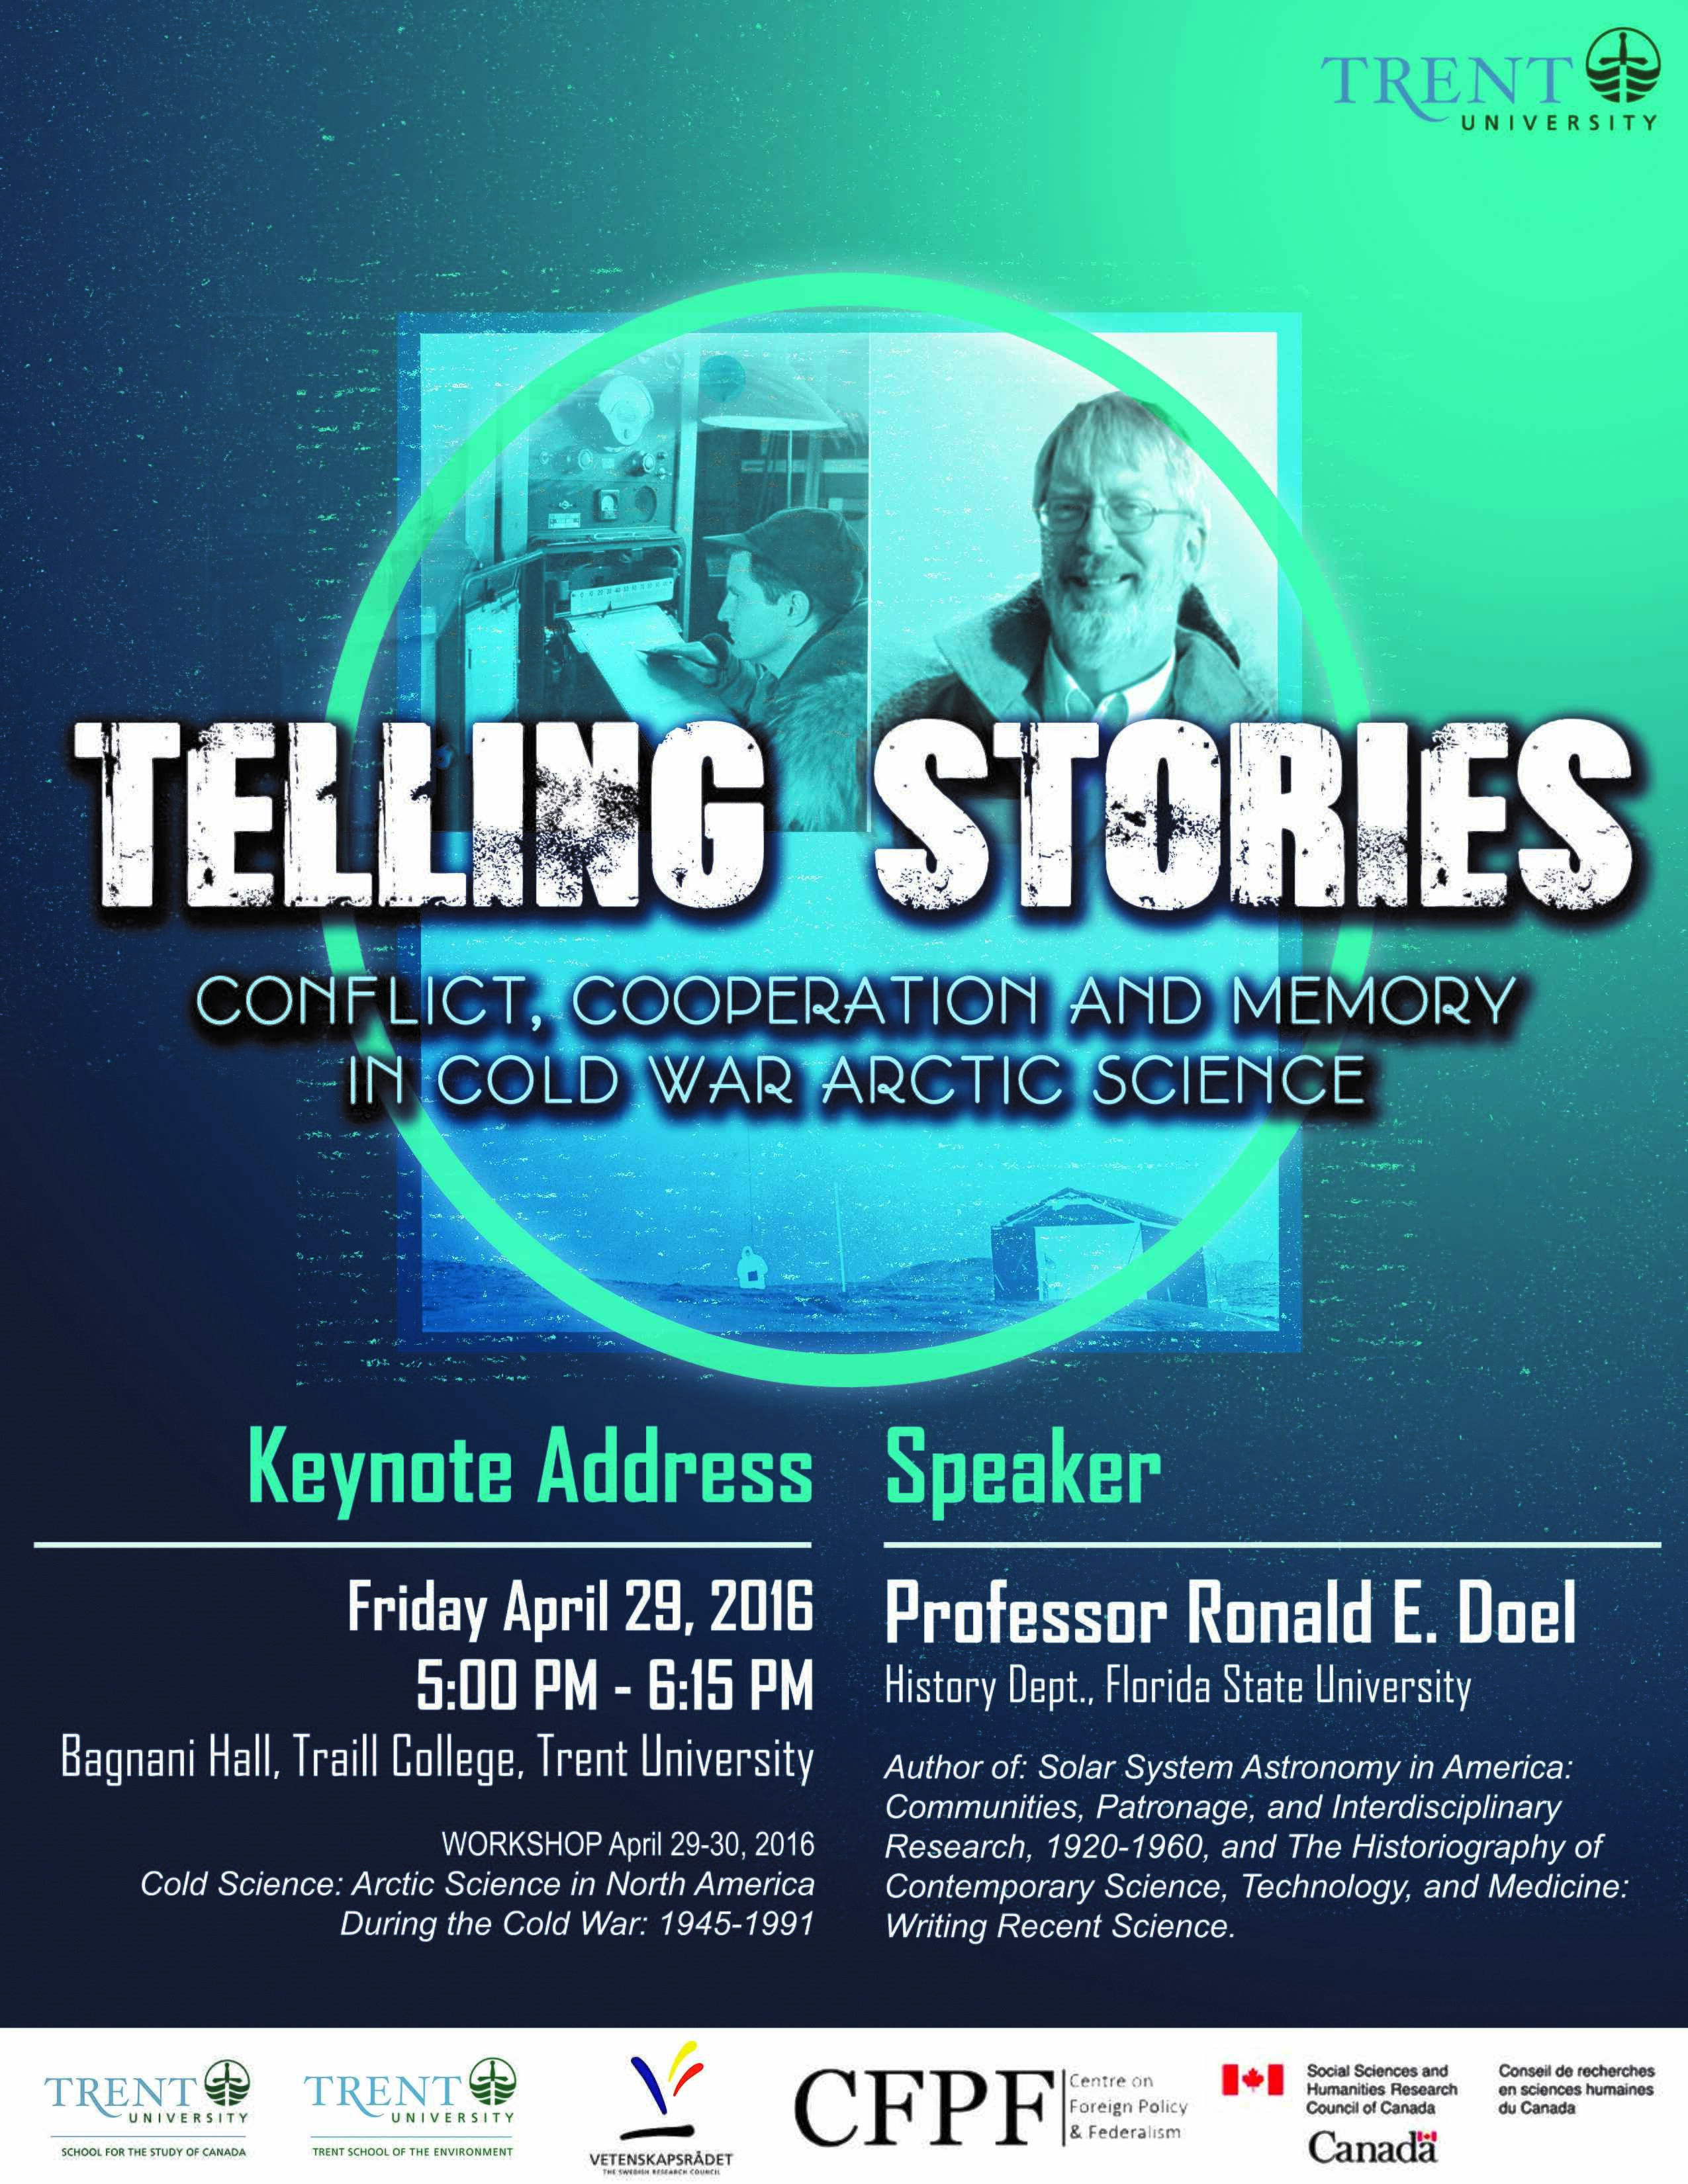 Cold Science Workshop Keynote Address "Telling Stories" 29 April 2016 with Ronald E. Doel